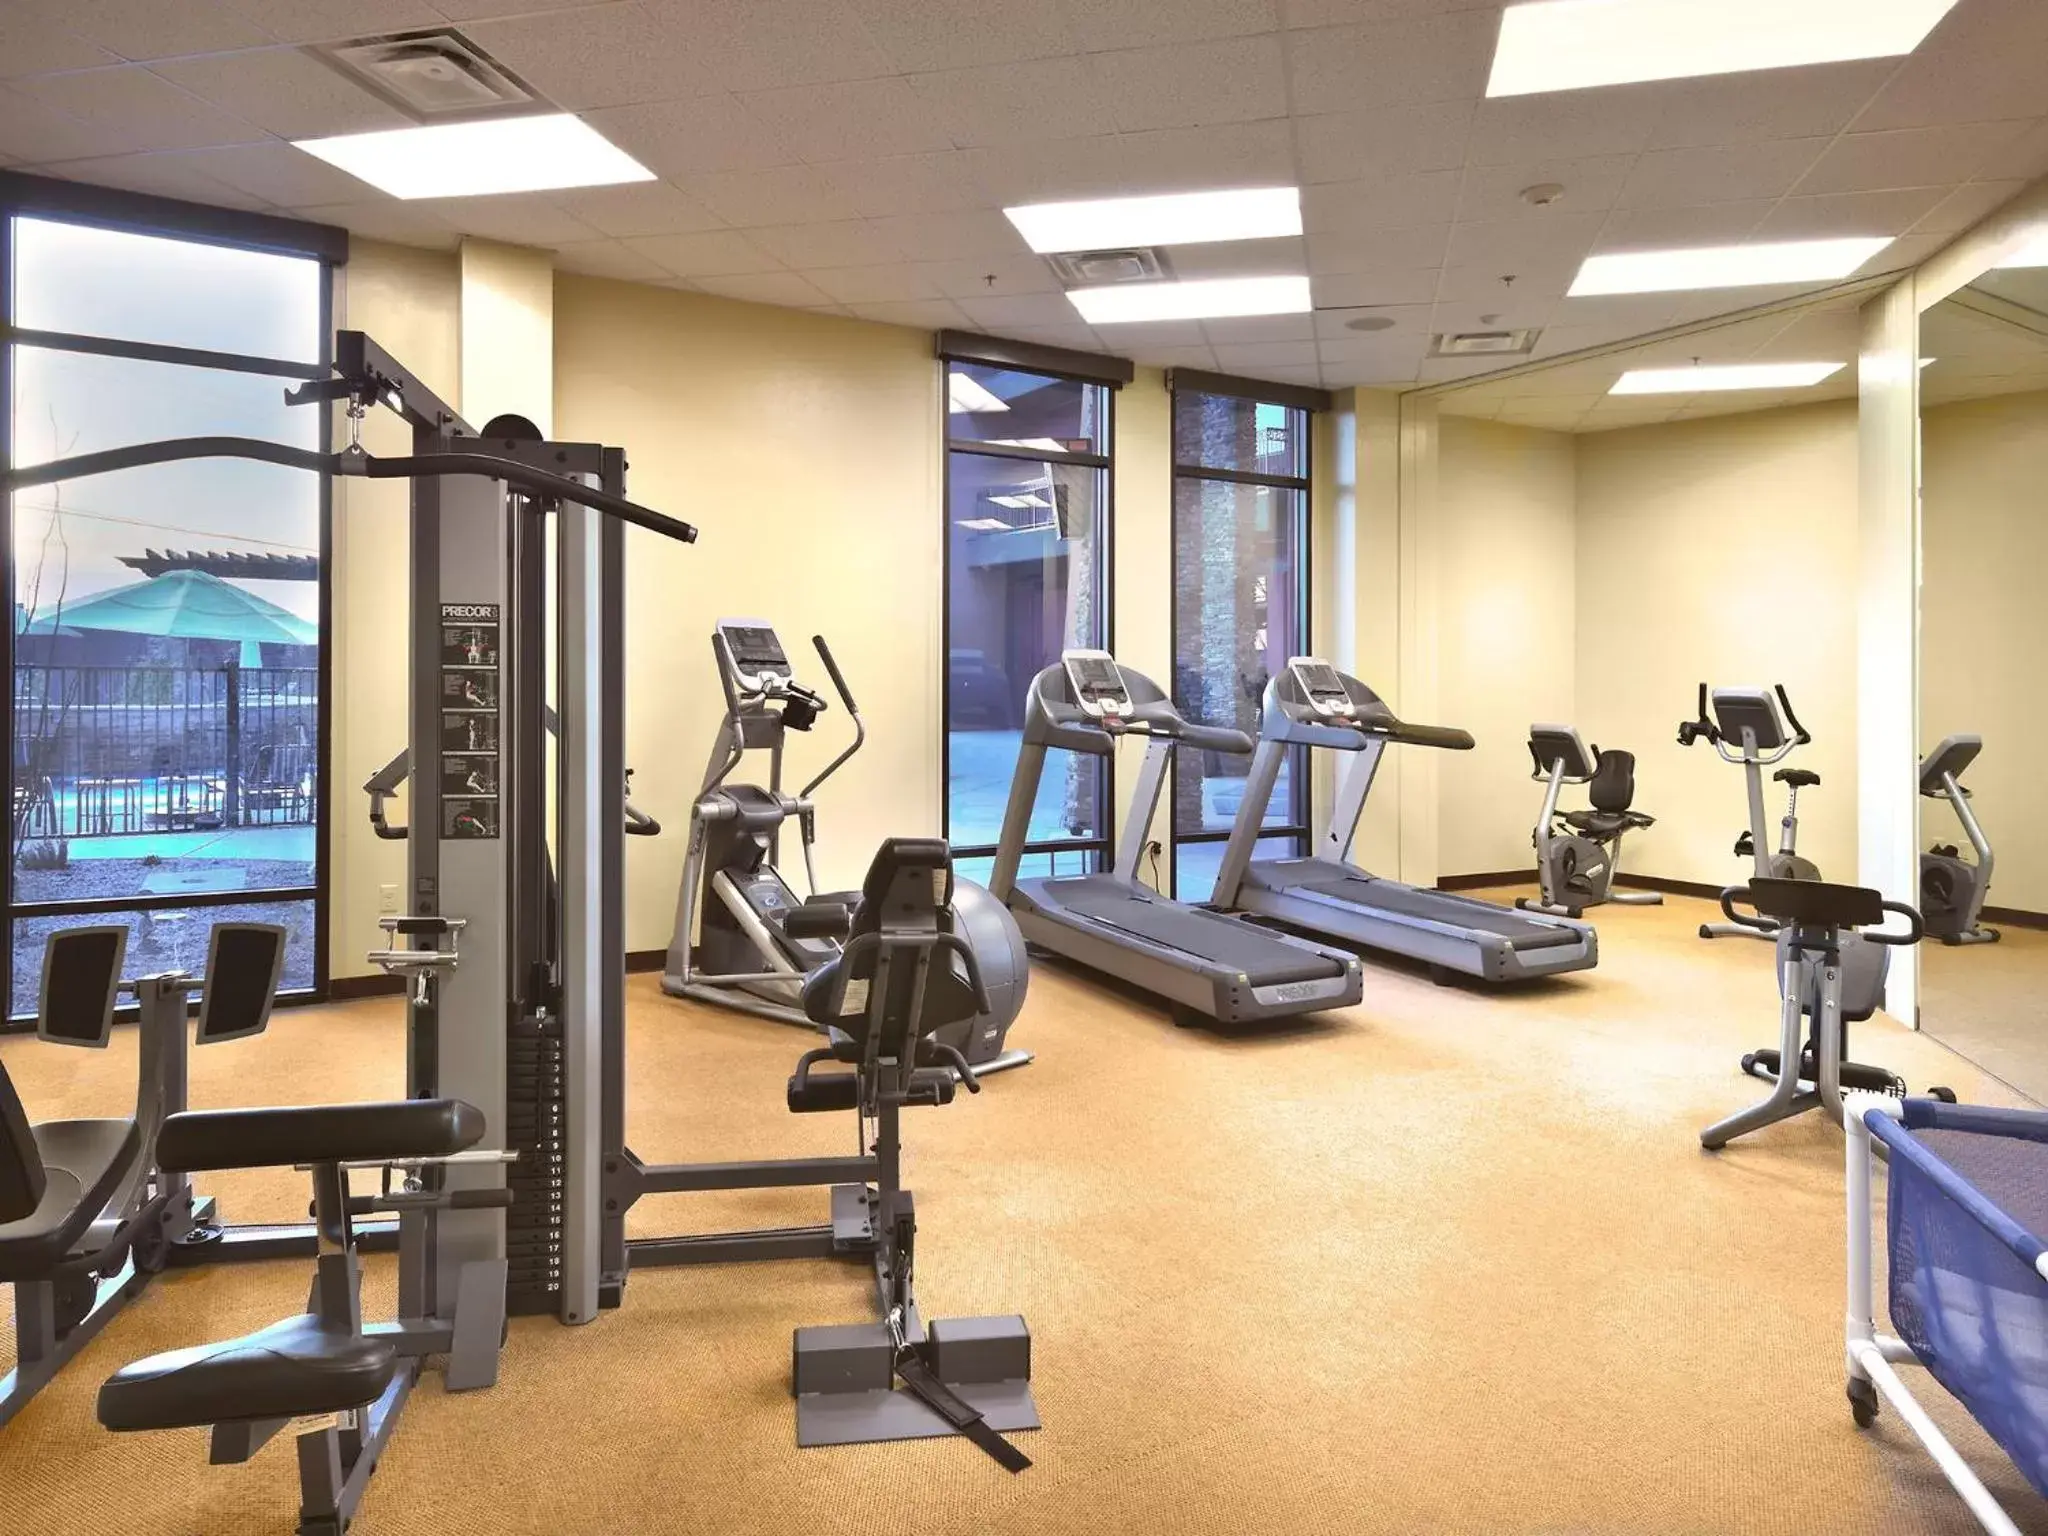 Fitness centre/facilities, Fitness Center/Facilities in Desert Diamond Casino